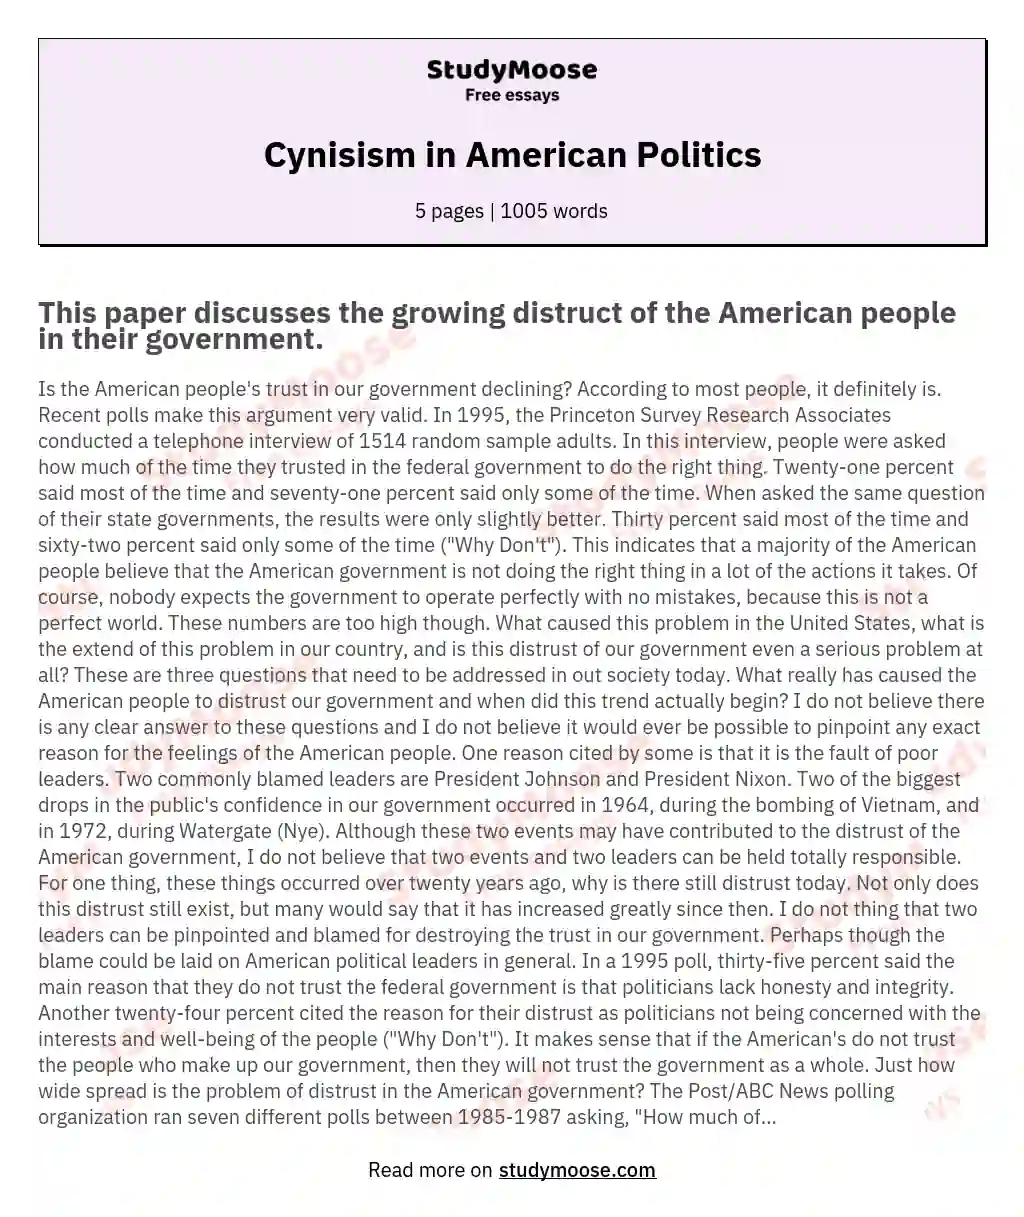 Cynisism in American Politics essay